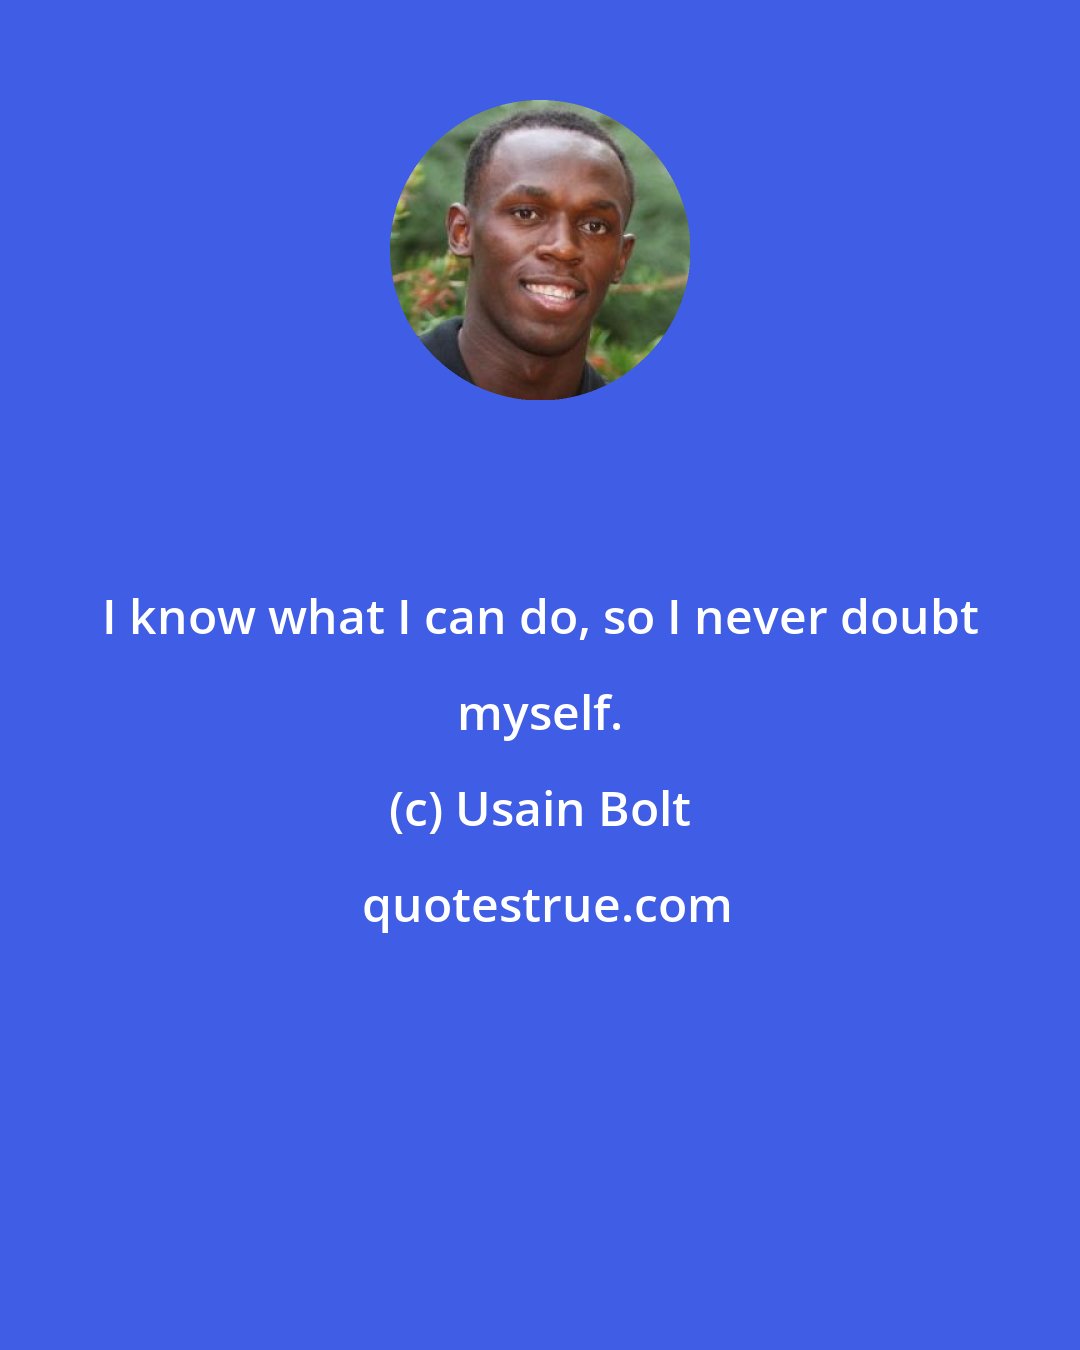 Usain Bolt: I know what I can do, so I never doubt myself.